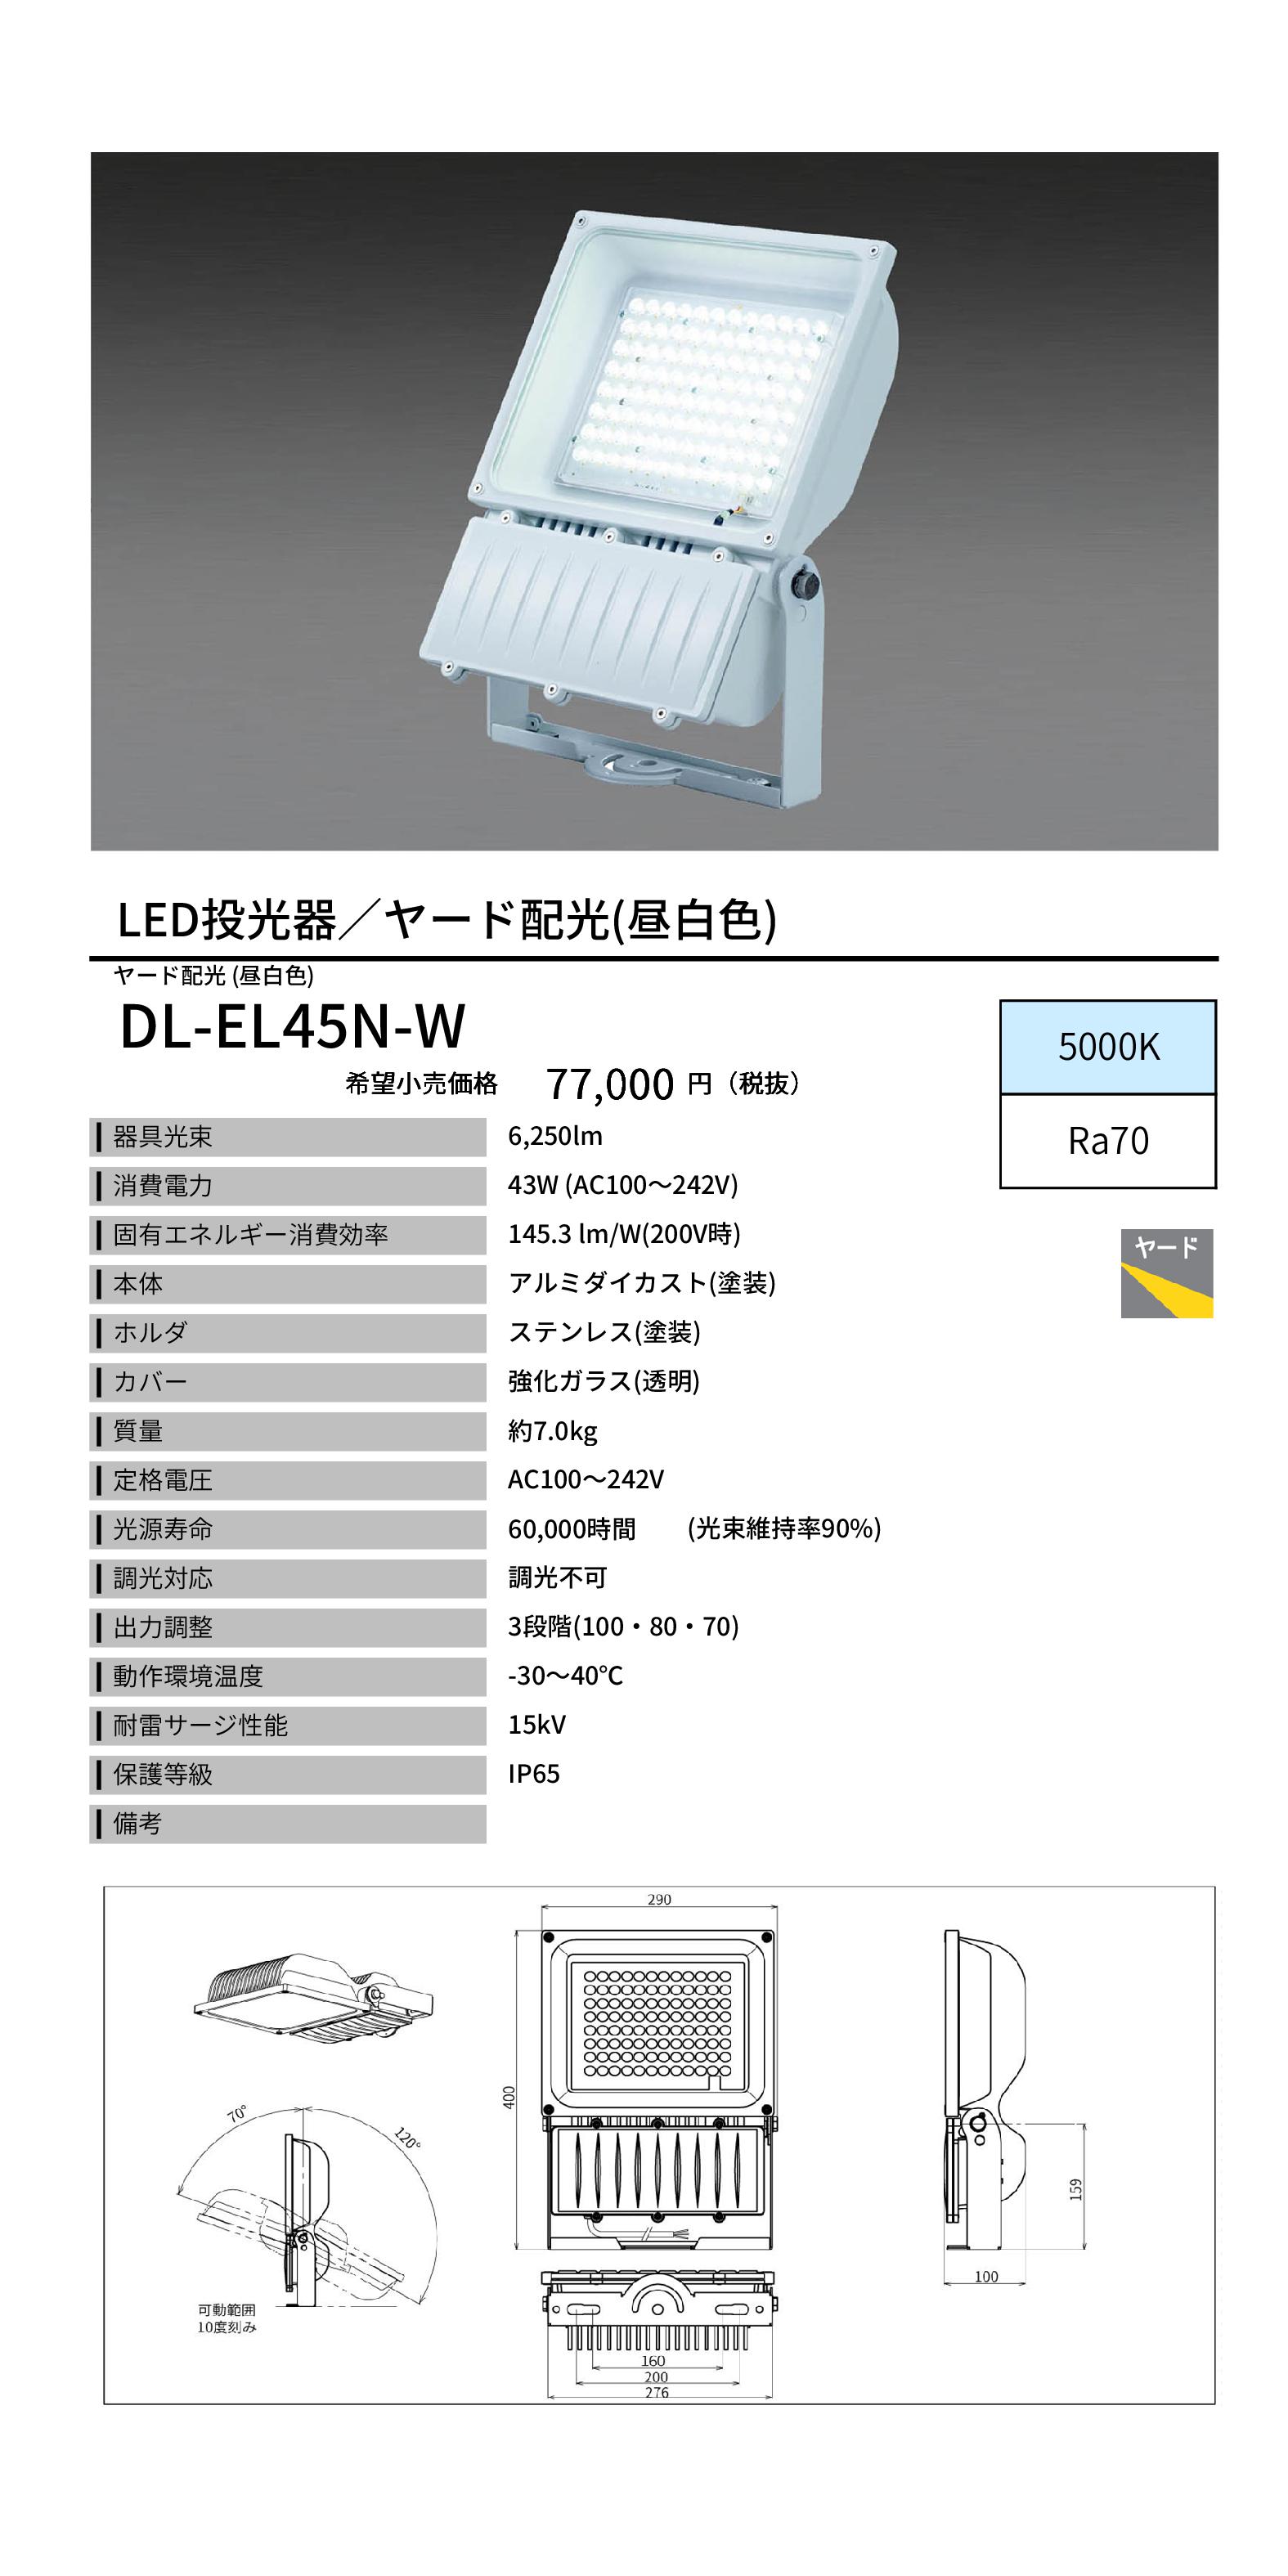 E30423N LSAN8 H LED投光器 レディオック フラッド スポラート 160Wタイプ 高温対応形(水銀ランプ700W相当) 狭角 屋外・屋内用 電球色 岩崎電気 - 1